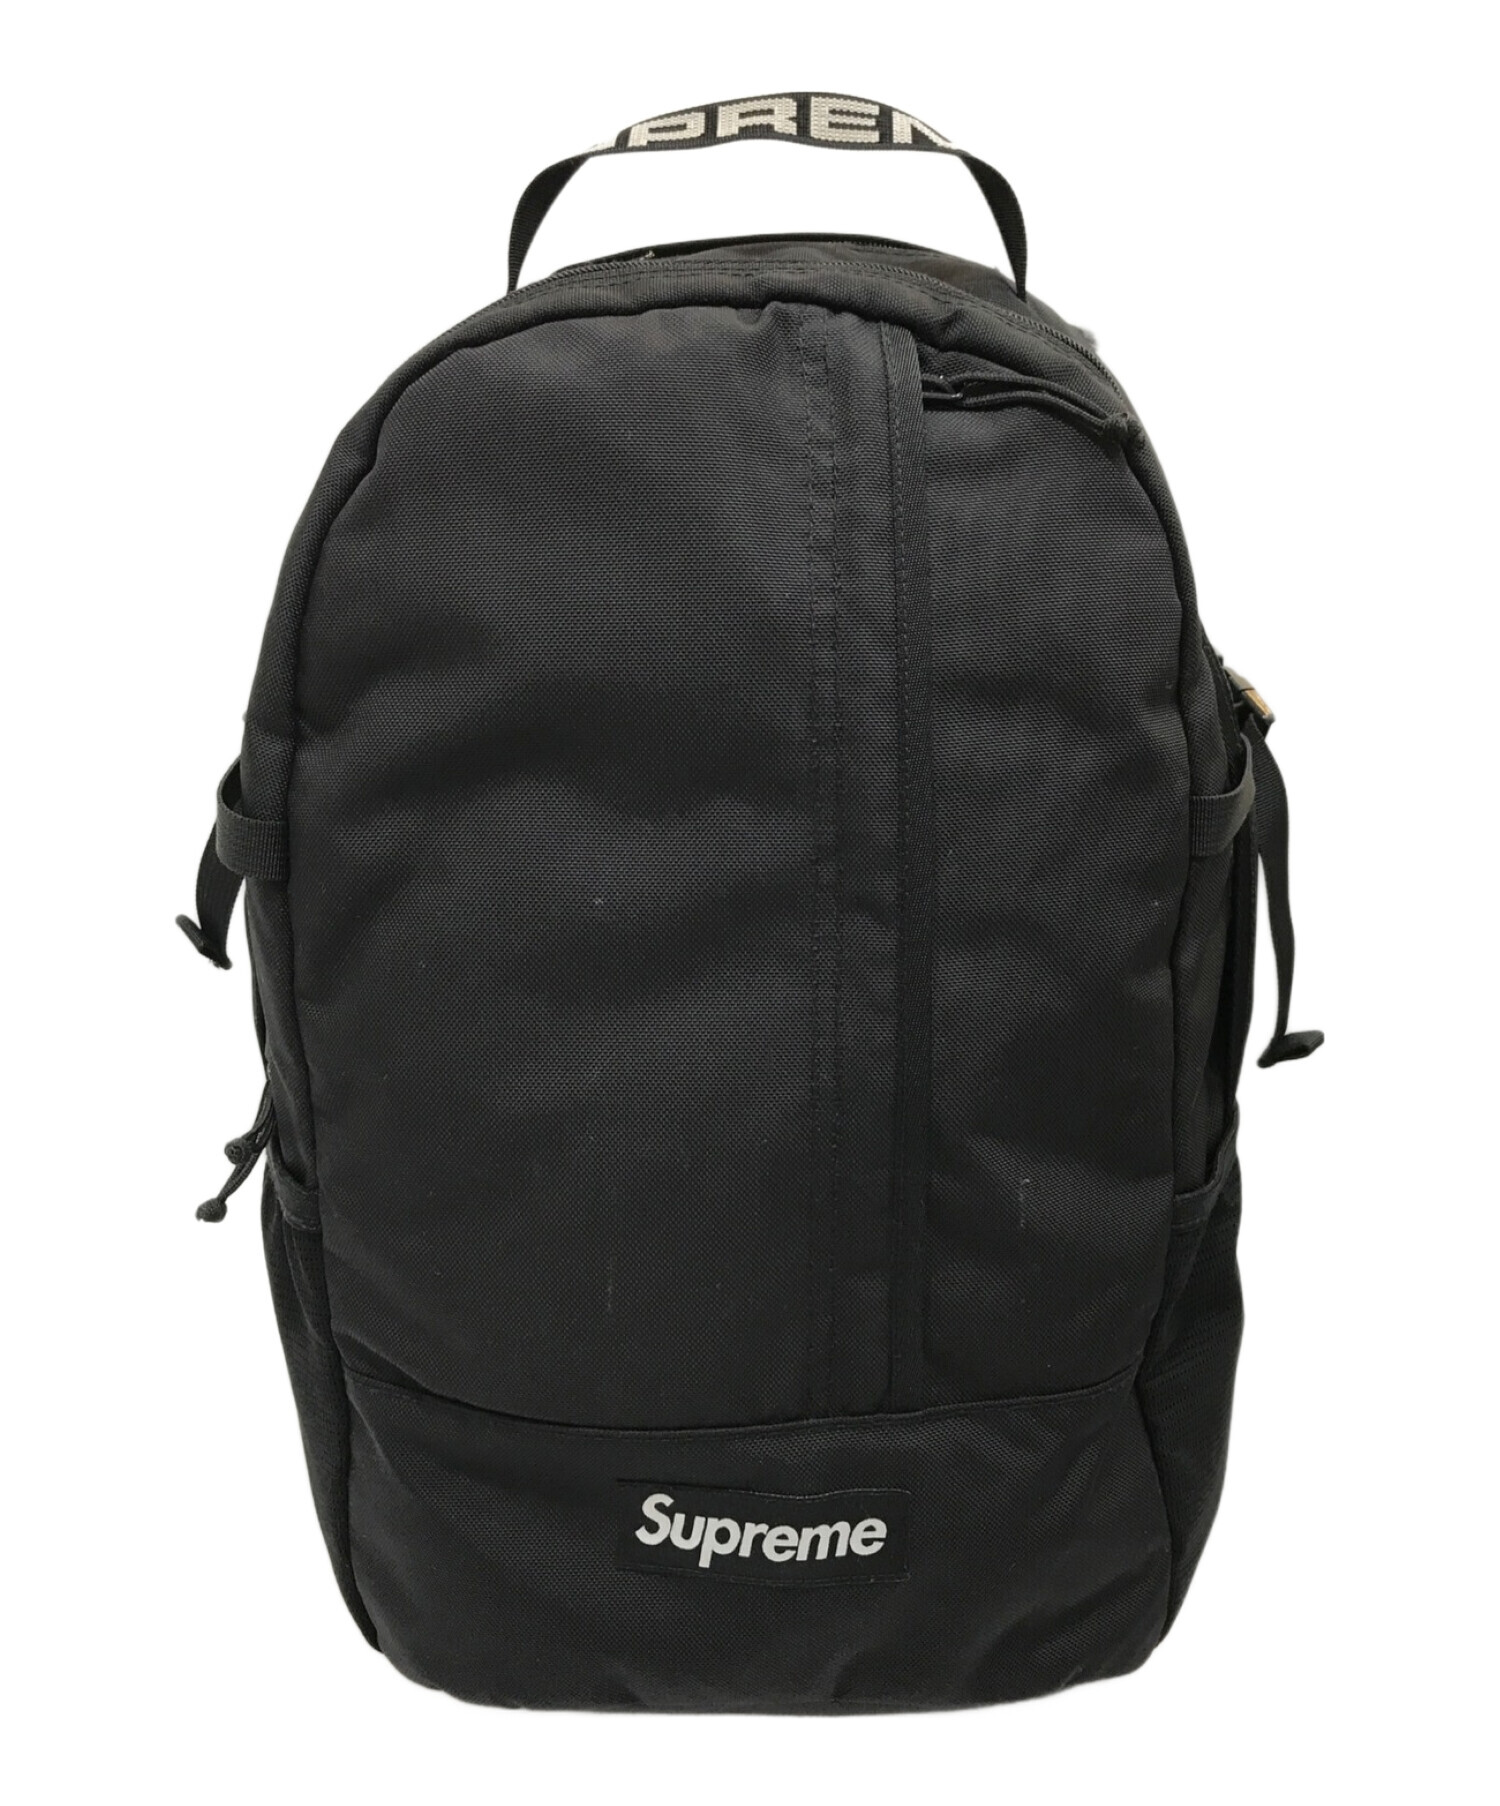 Supreme (シュプリーム) Back Pack ブラック